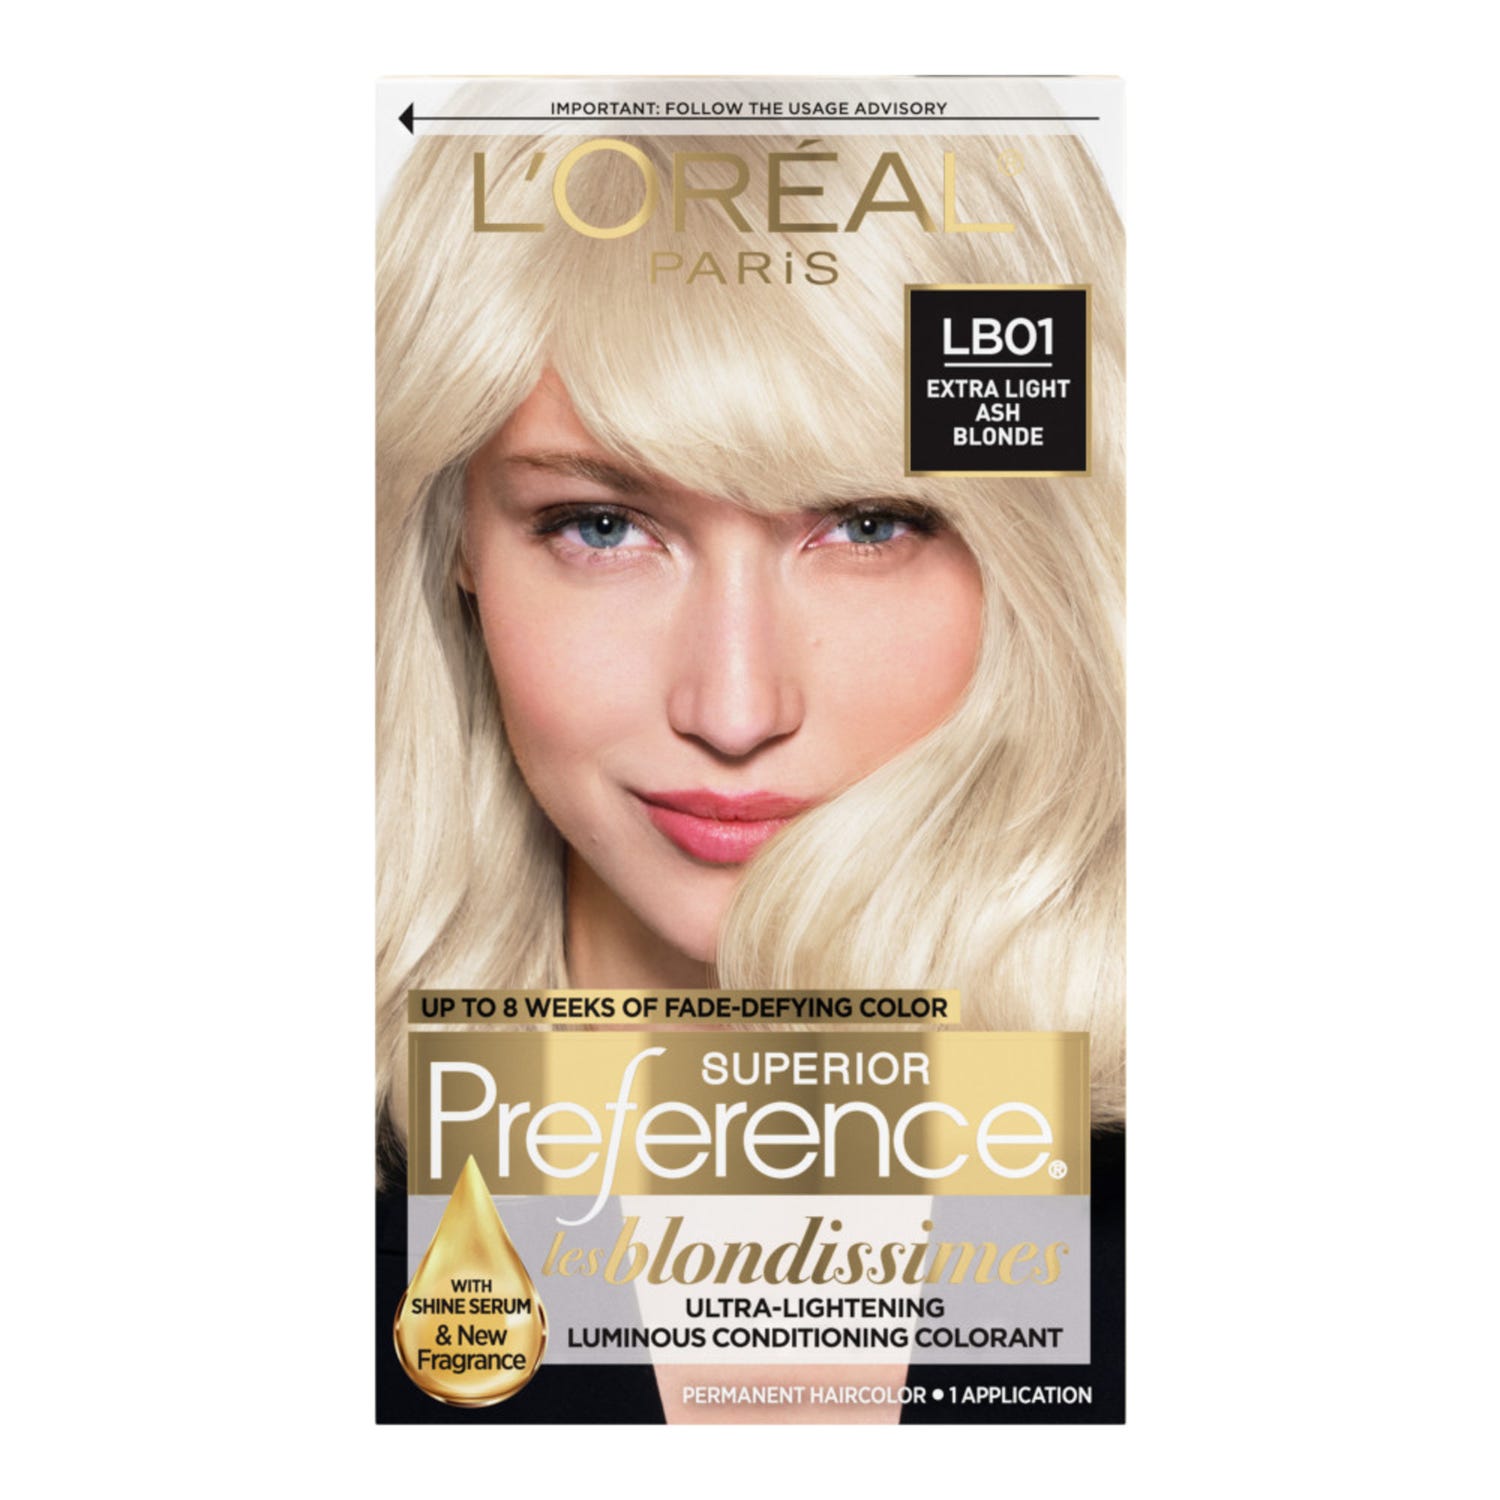 L'Oreal Paris Superior Preference Permanent Hair Color - LB01 Extra Light  Ash Blonde